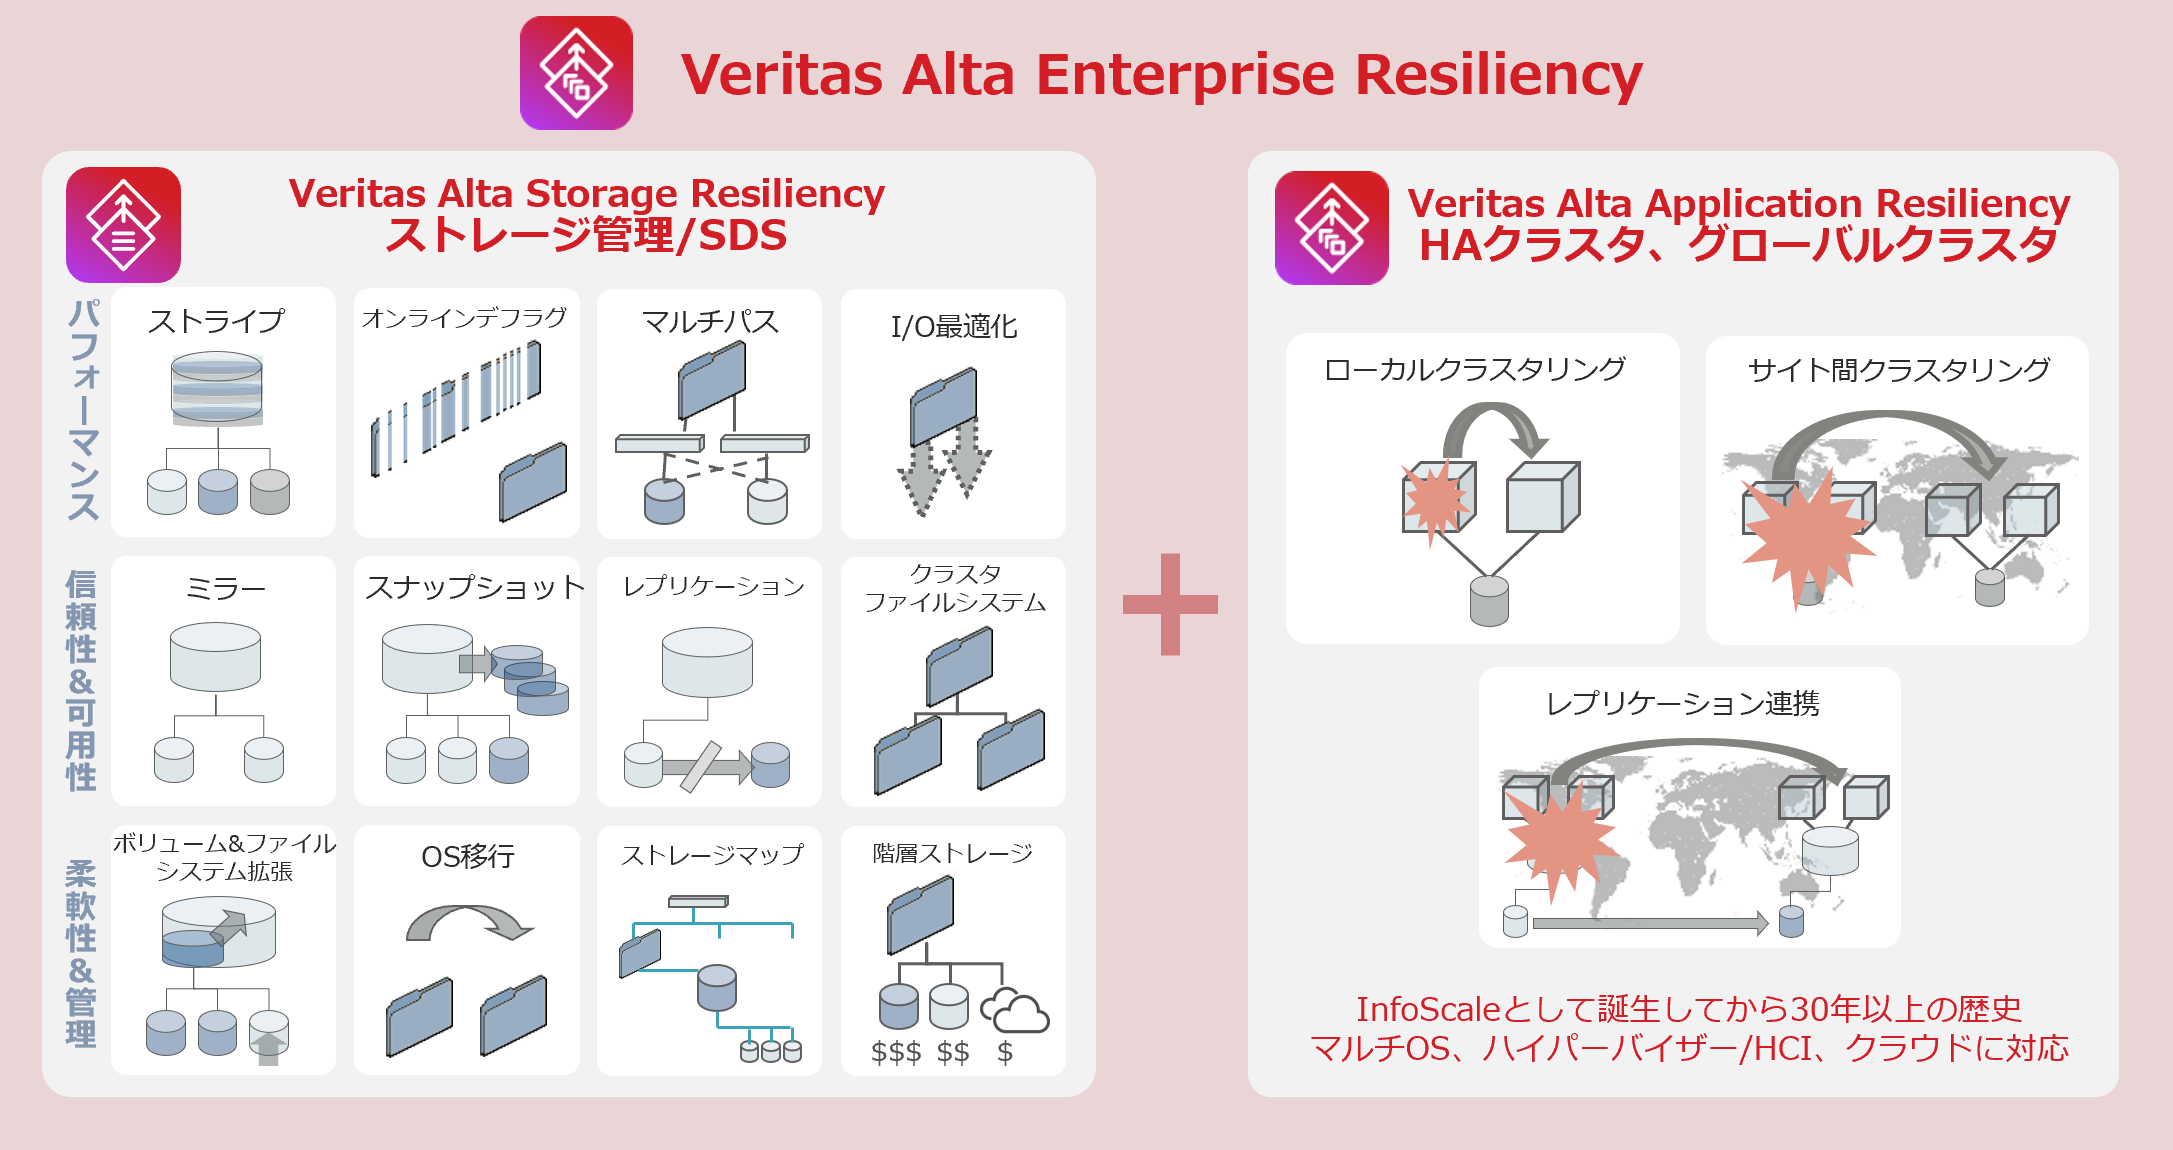 VVeritas Alta Enterprise Resiliency